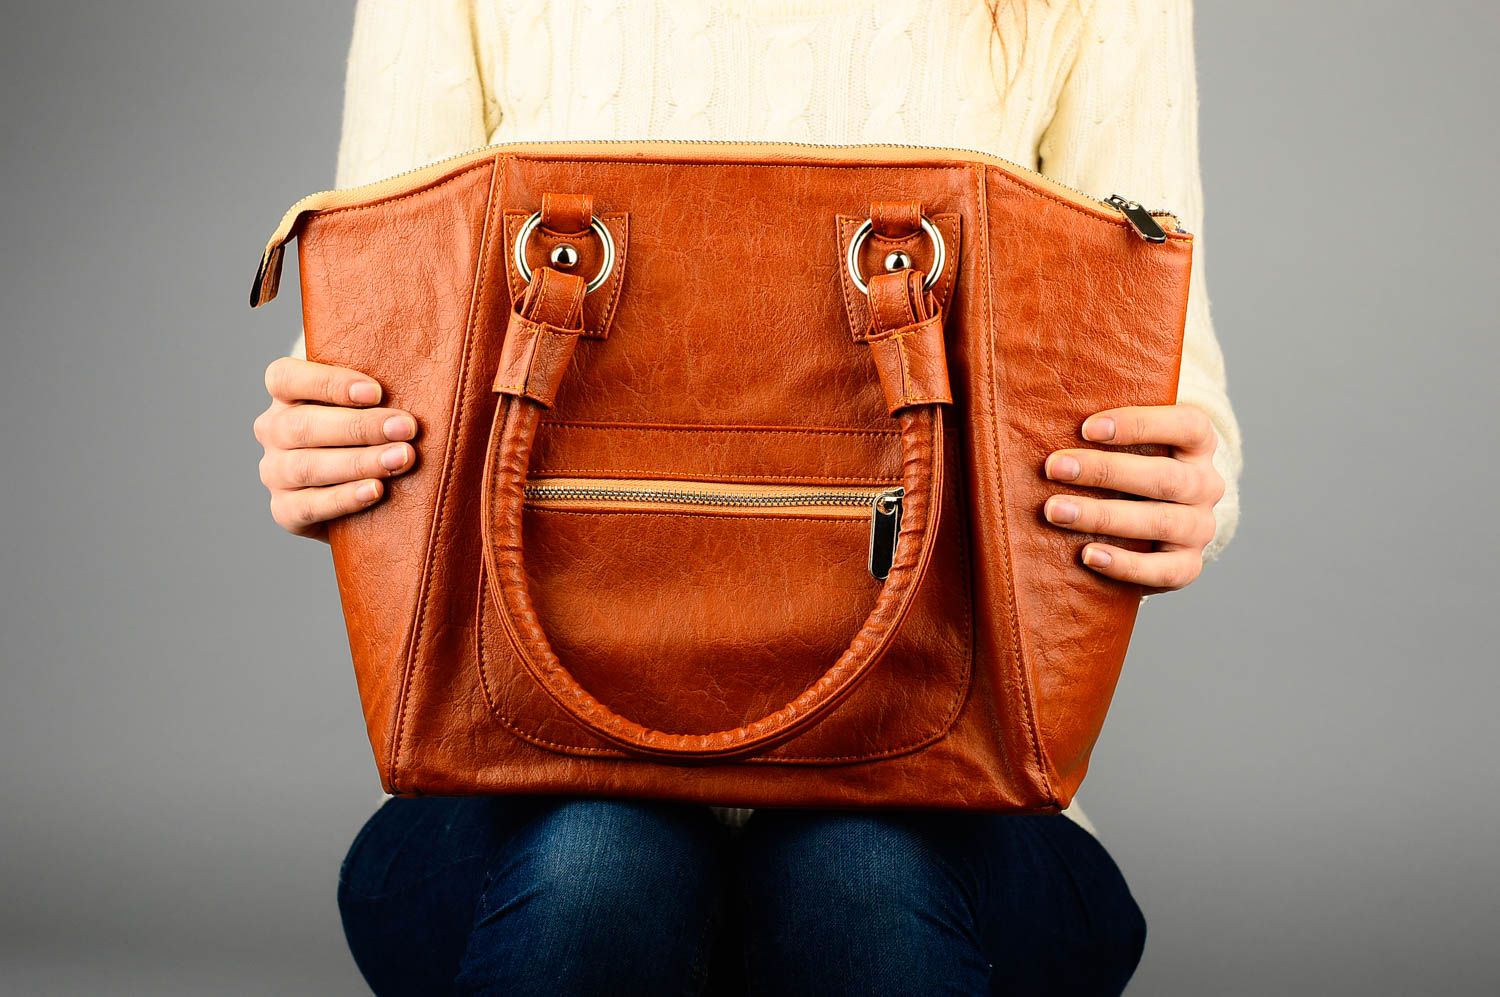 Stylish handmade leather bag leather goods handbag design fashion trends photo 2